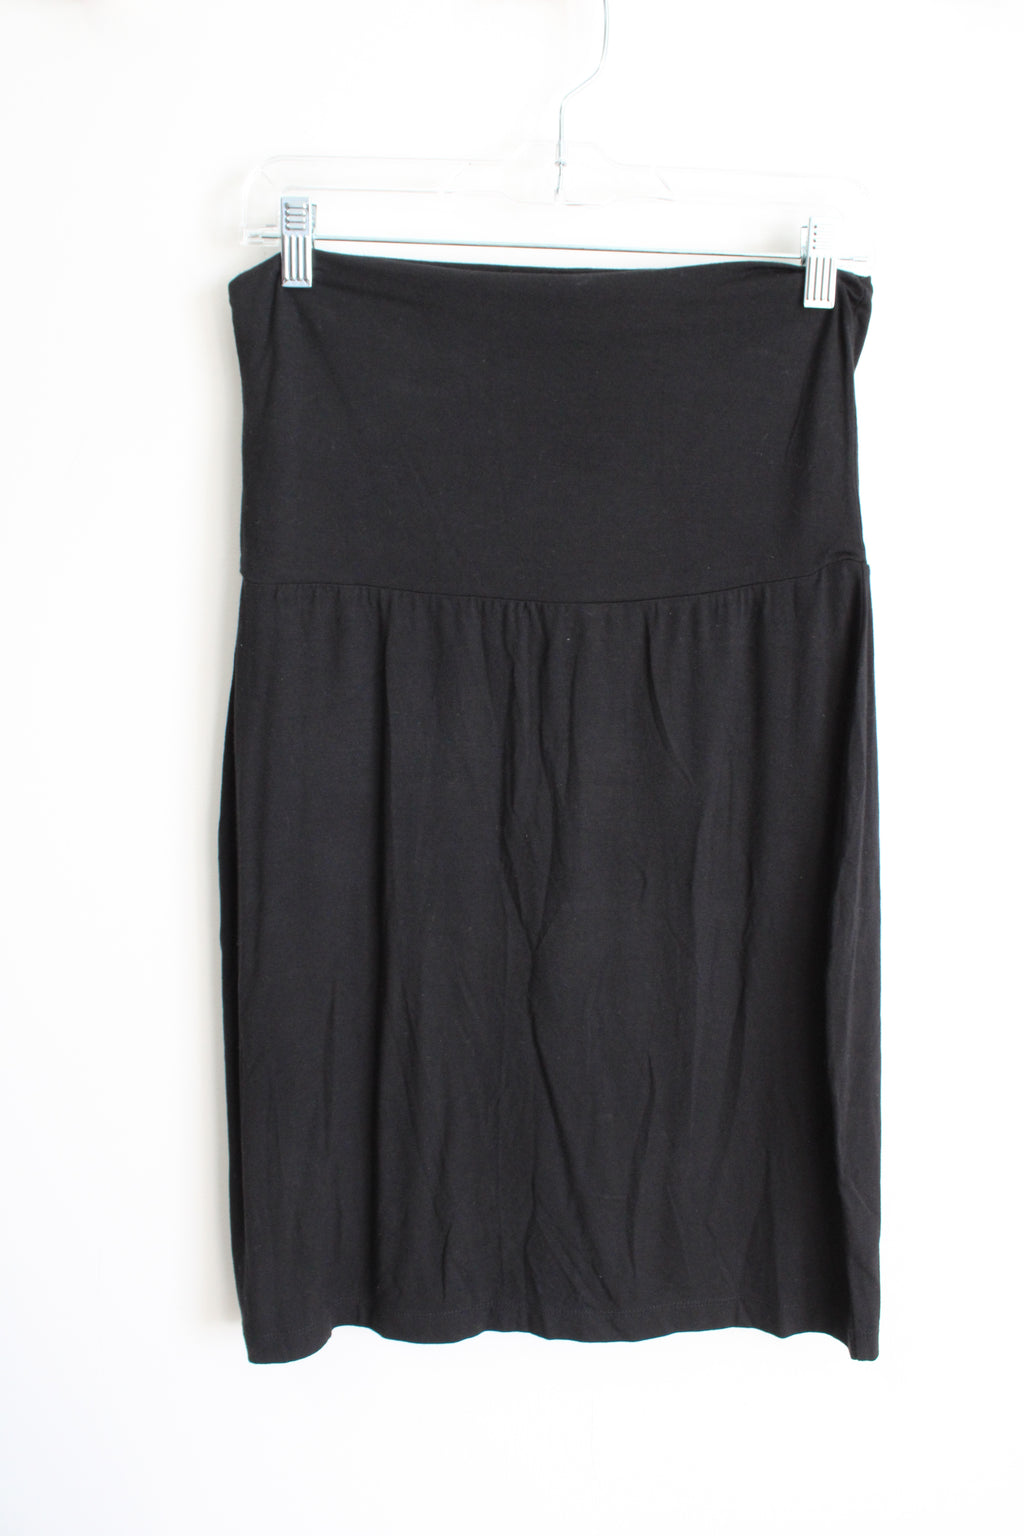 Gap Black Rayon Skirt | S